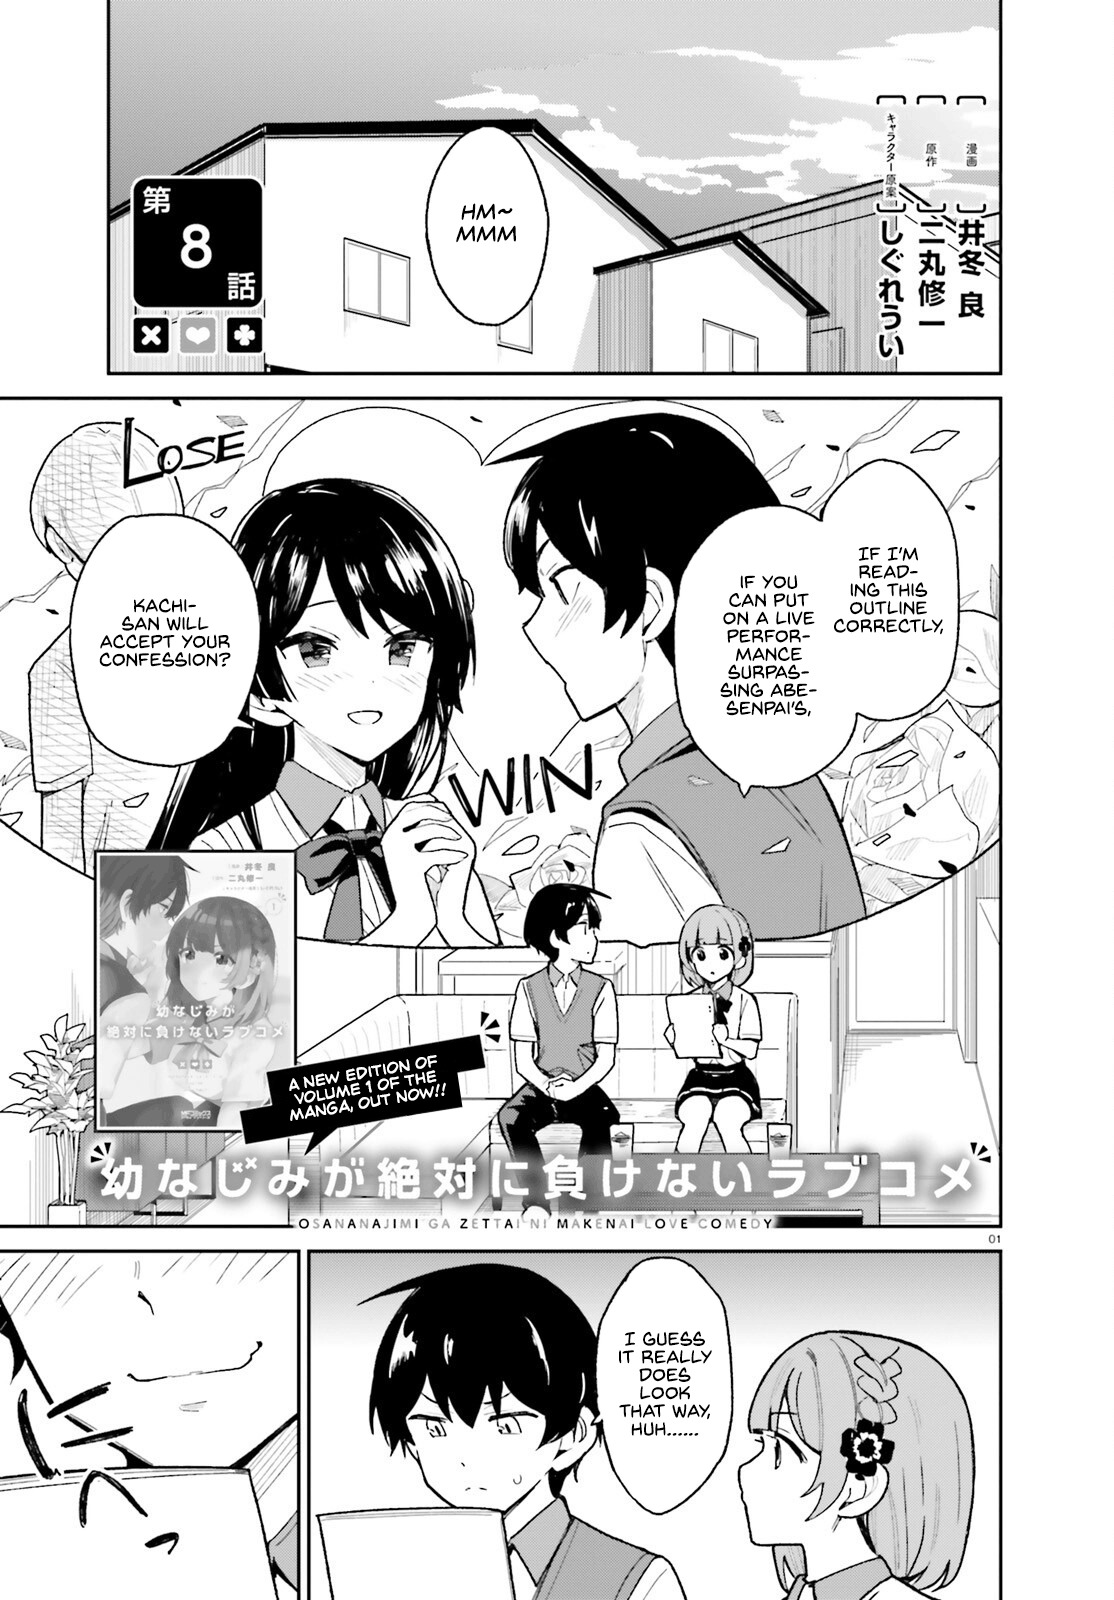 Read Osananajimi ga Zettai ni Makenai Love Comedy Manga English [New  Chapters] Online Free - MangaClash